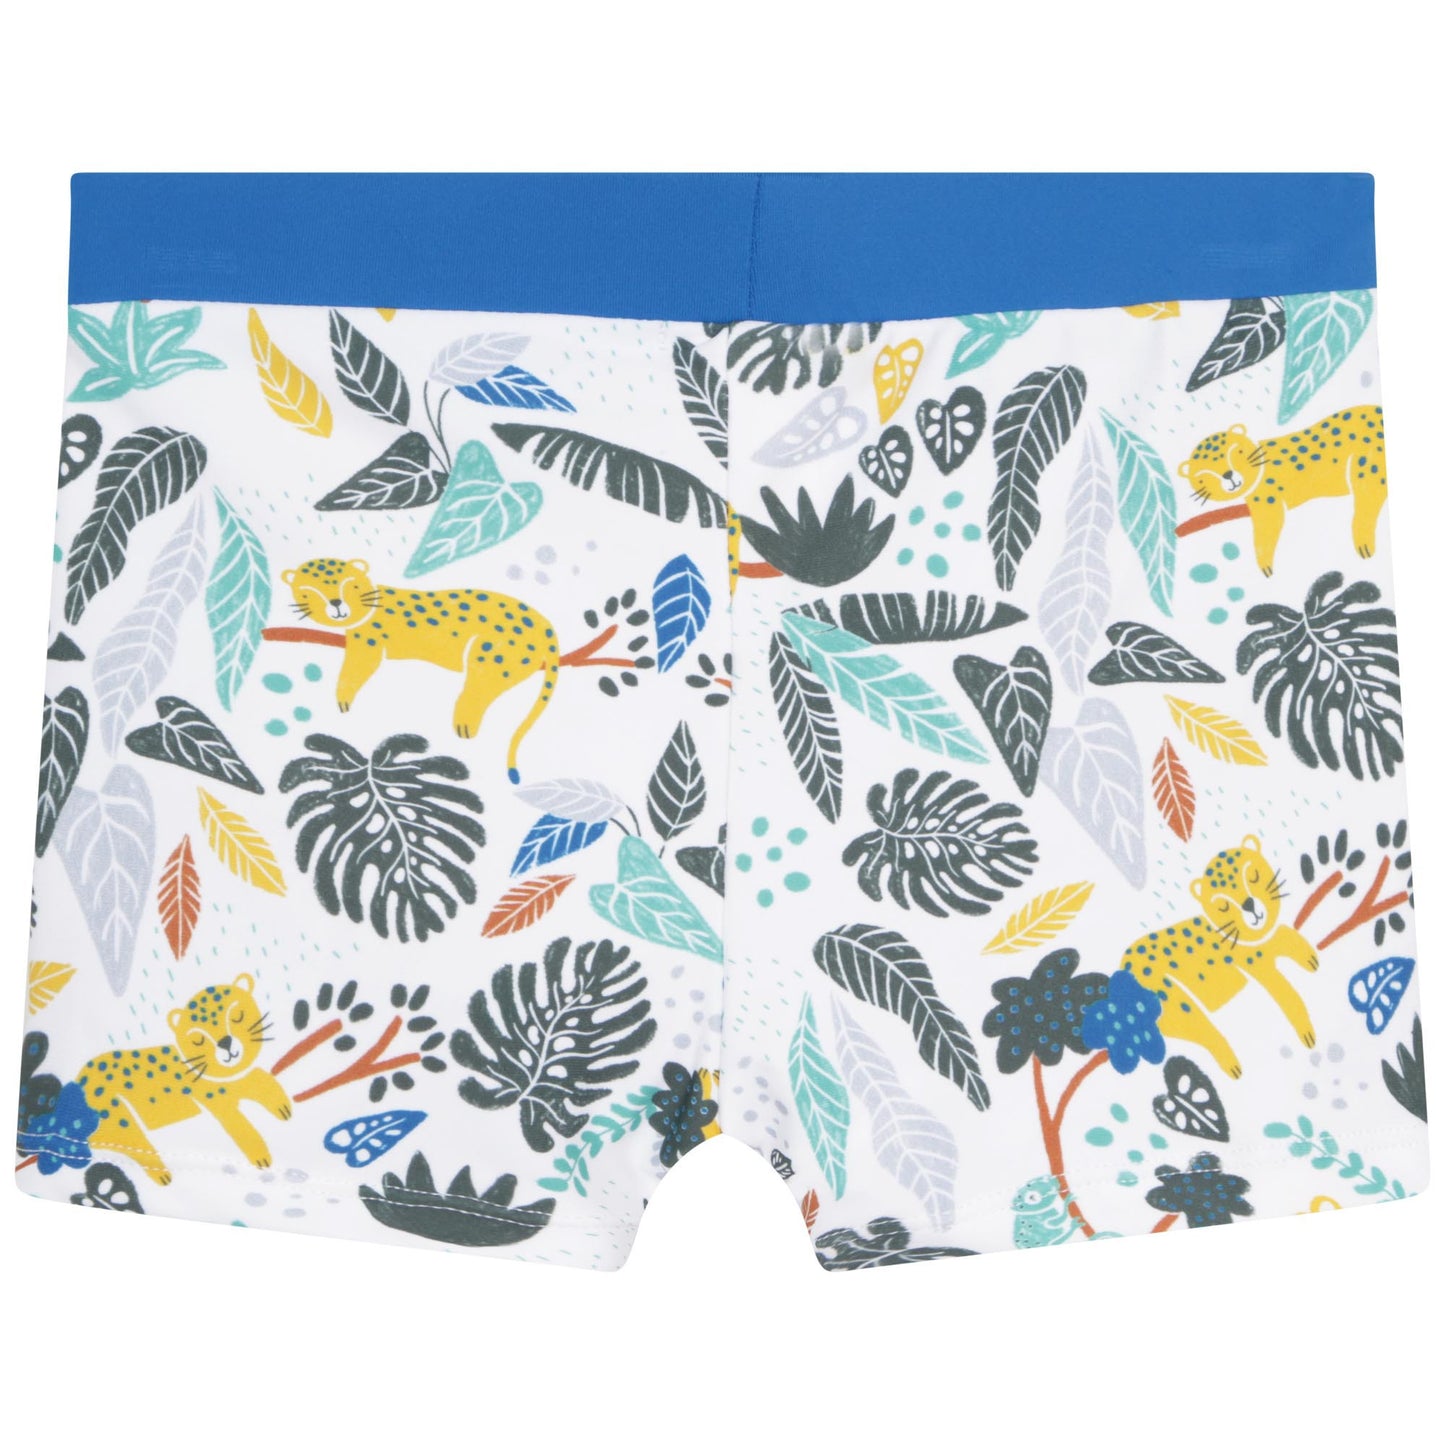 Jungle Print Swim Trunks - Carrement Beau